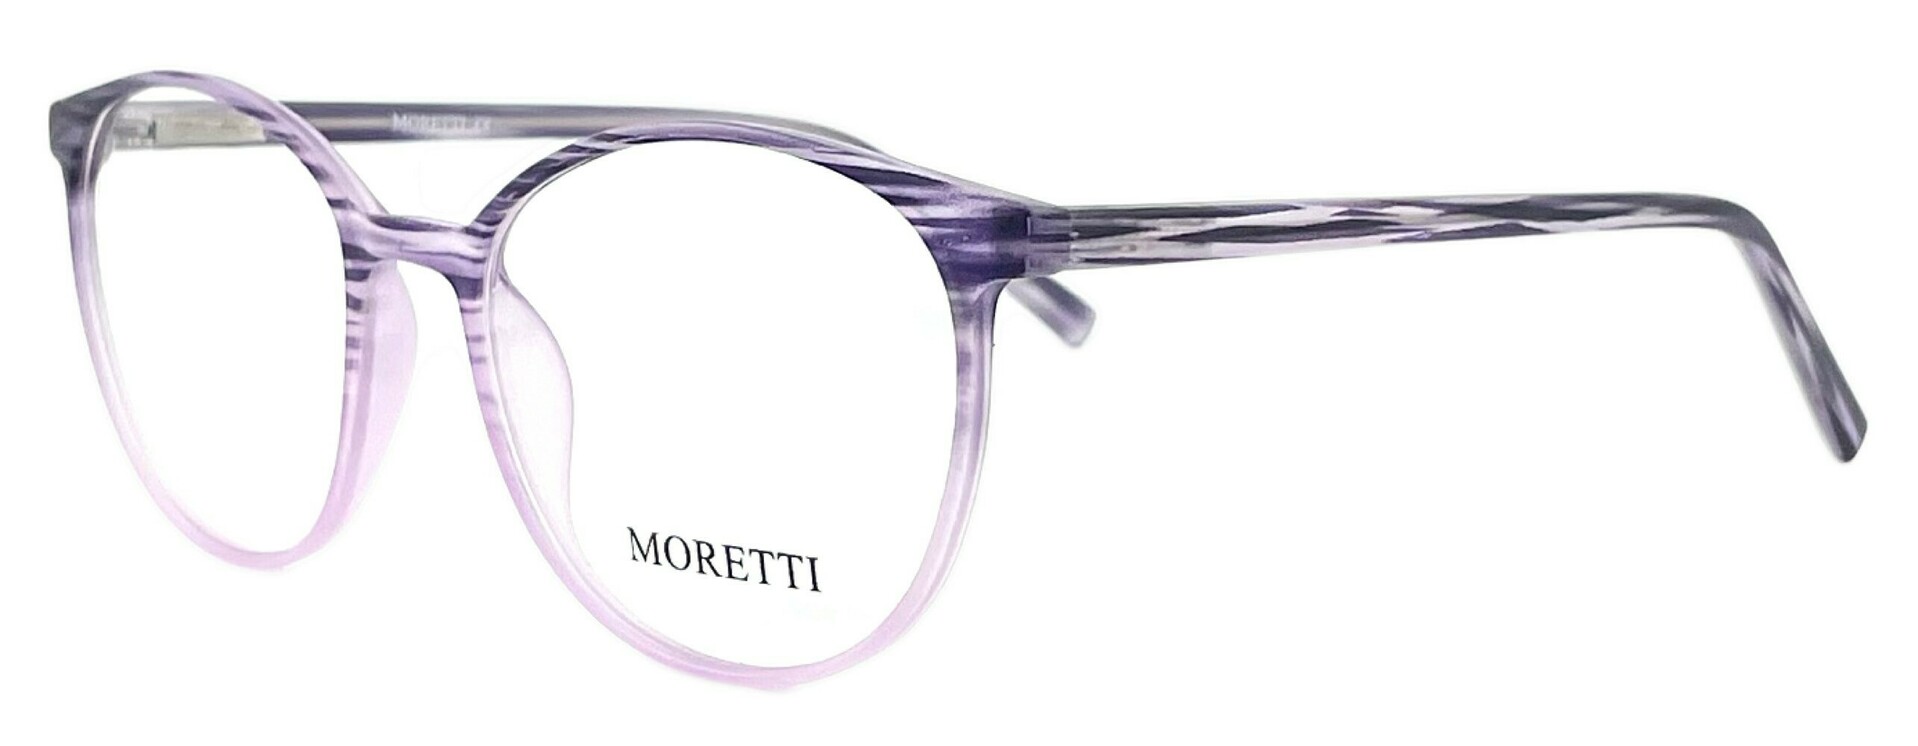 Moretti 2023009 C3 2